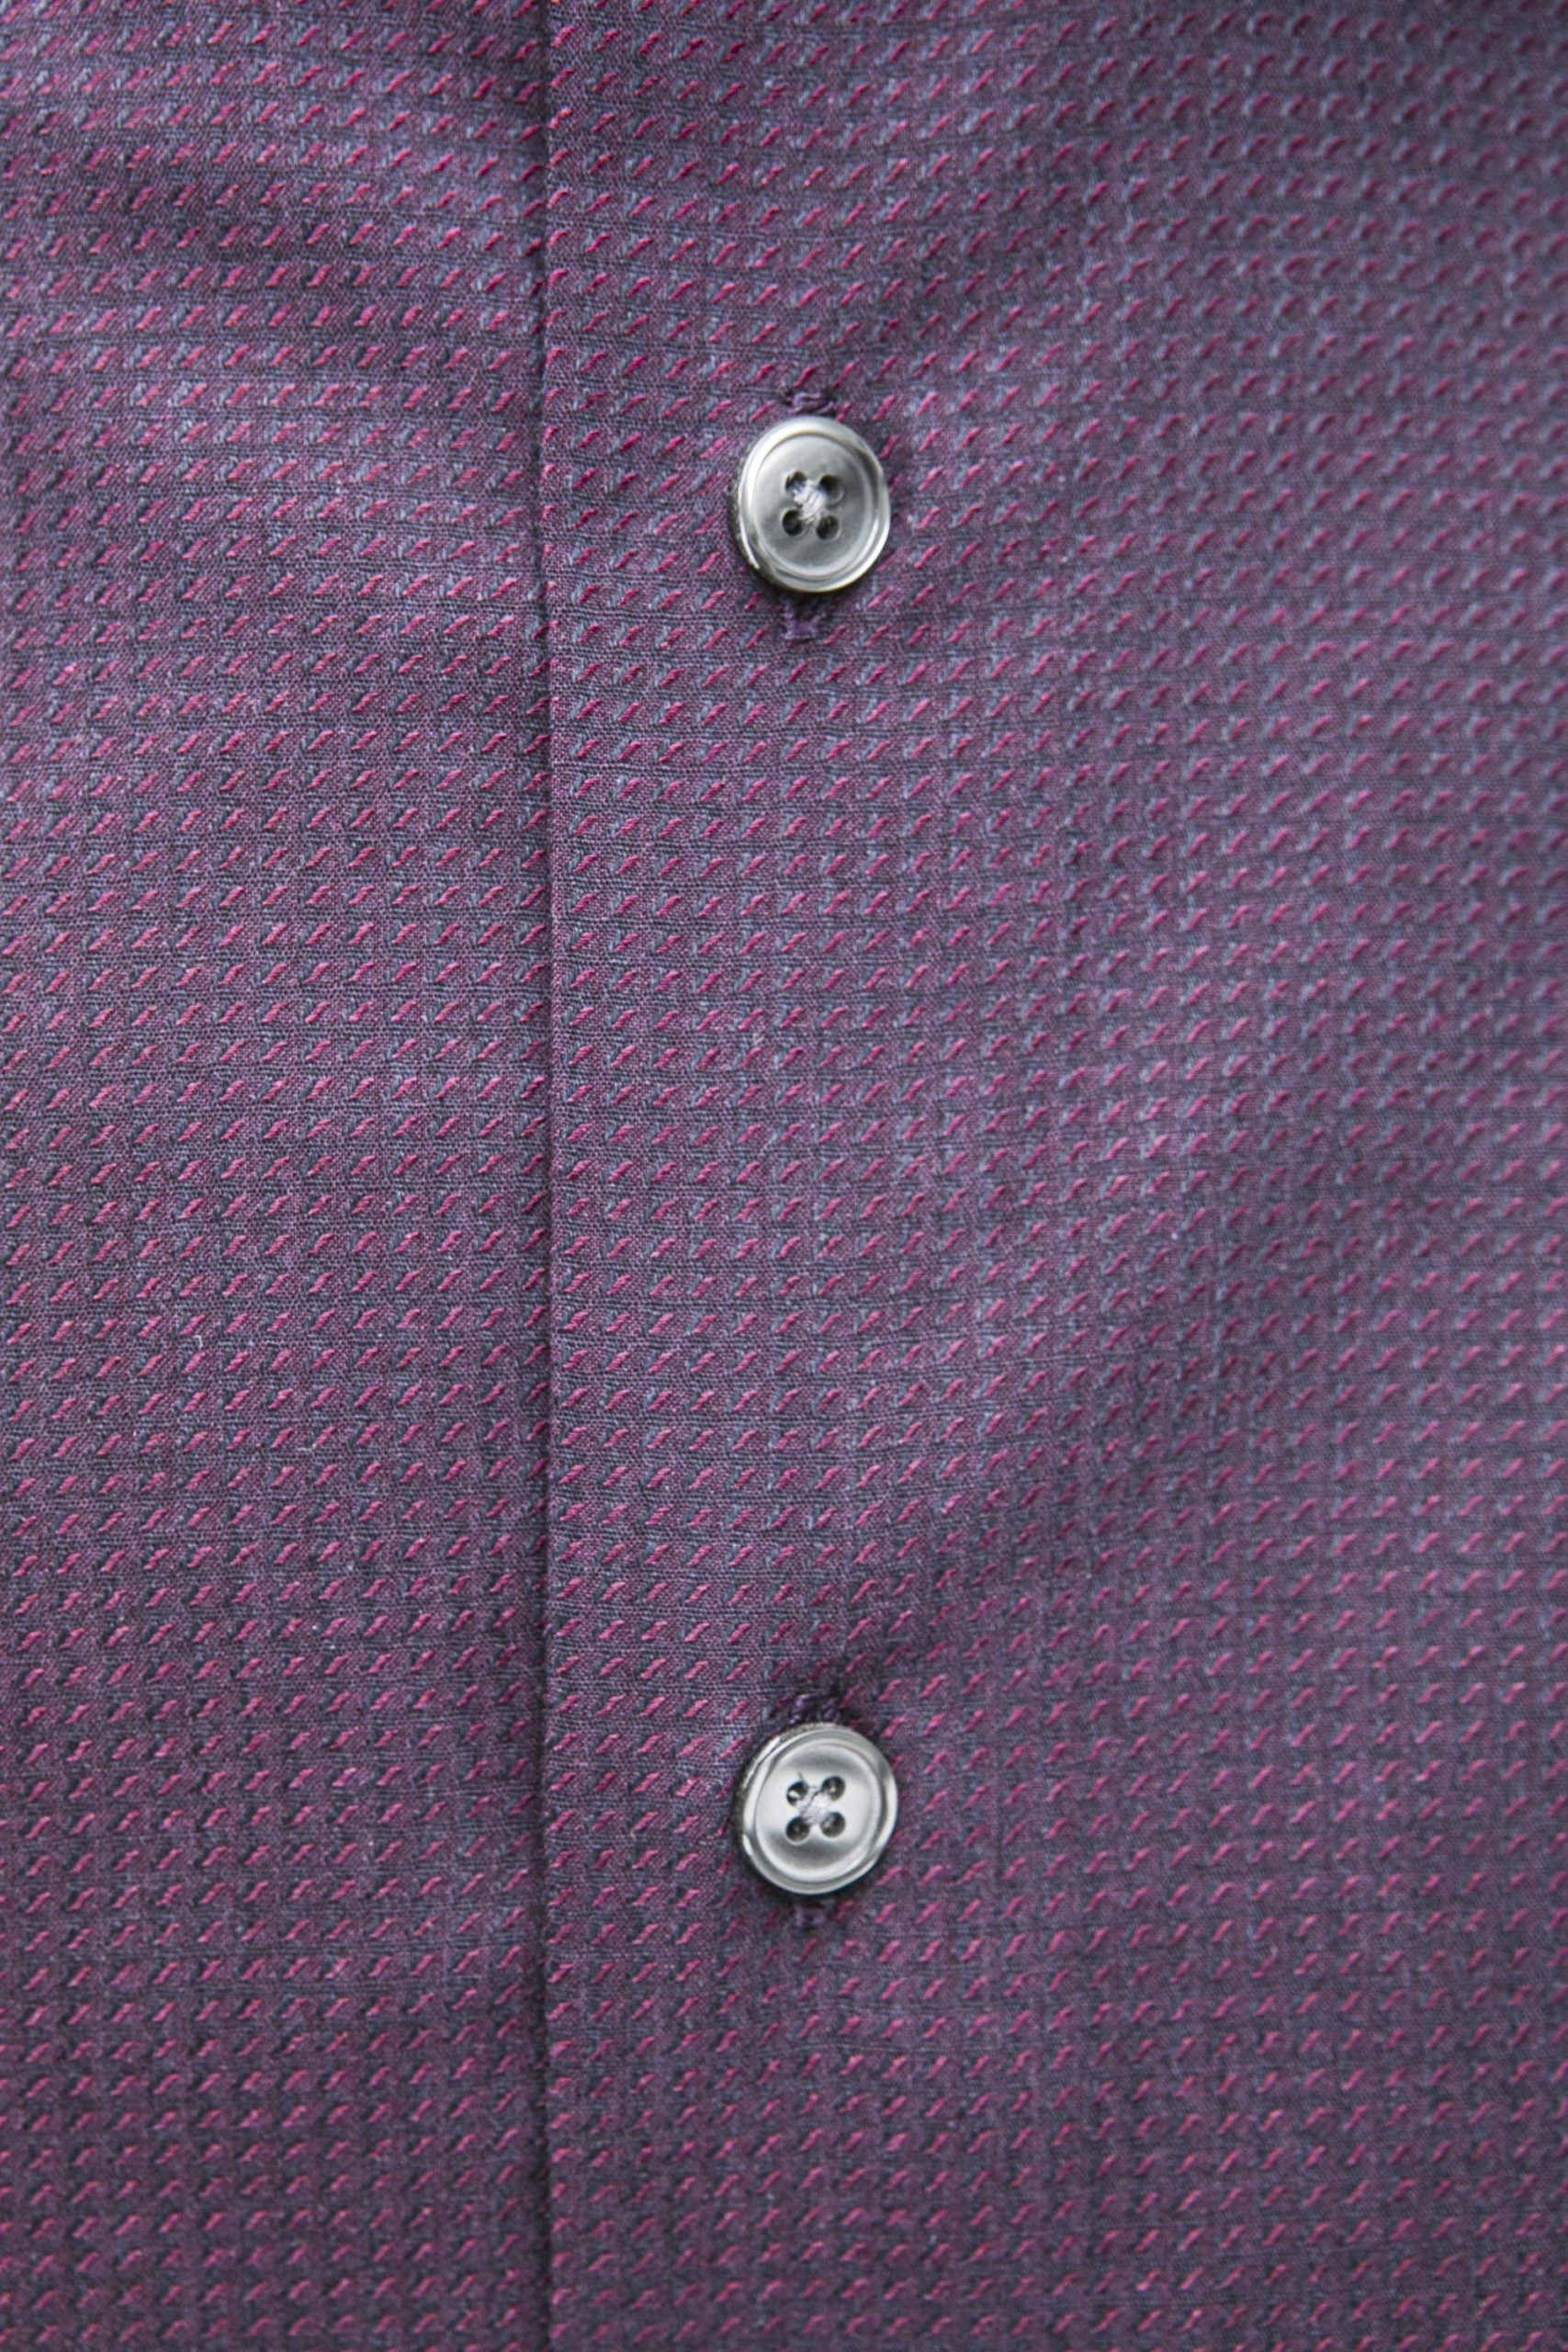 Robert Friedman Sleek Medium Slim Collar Shirt In Purple